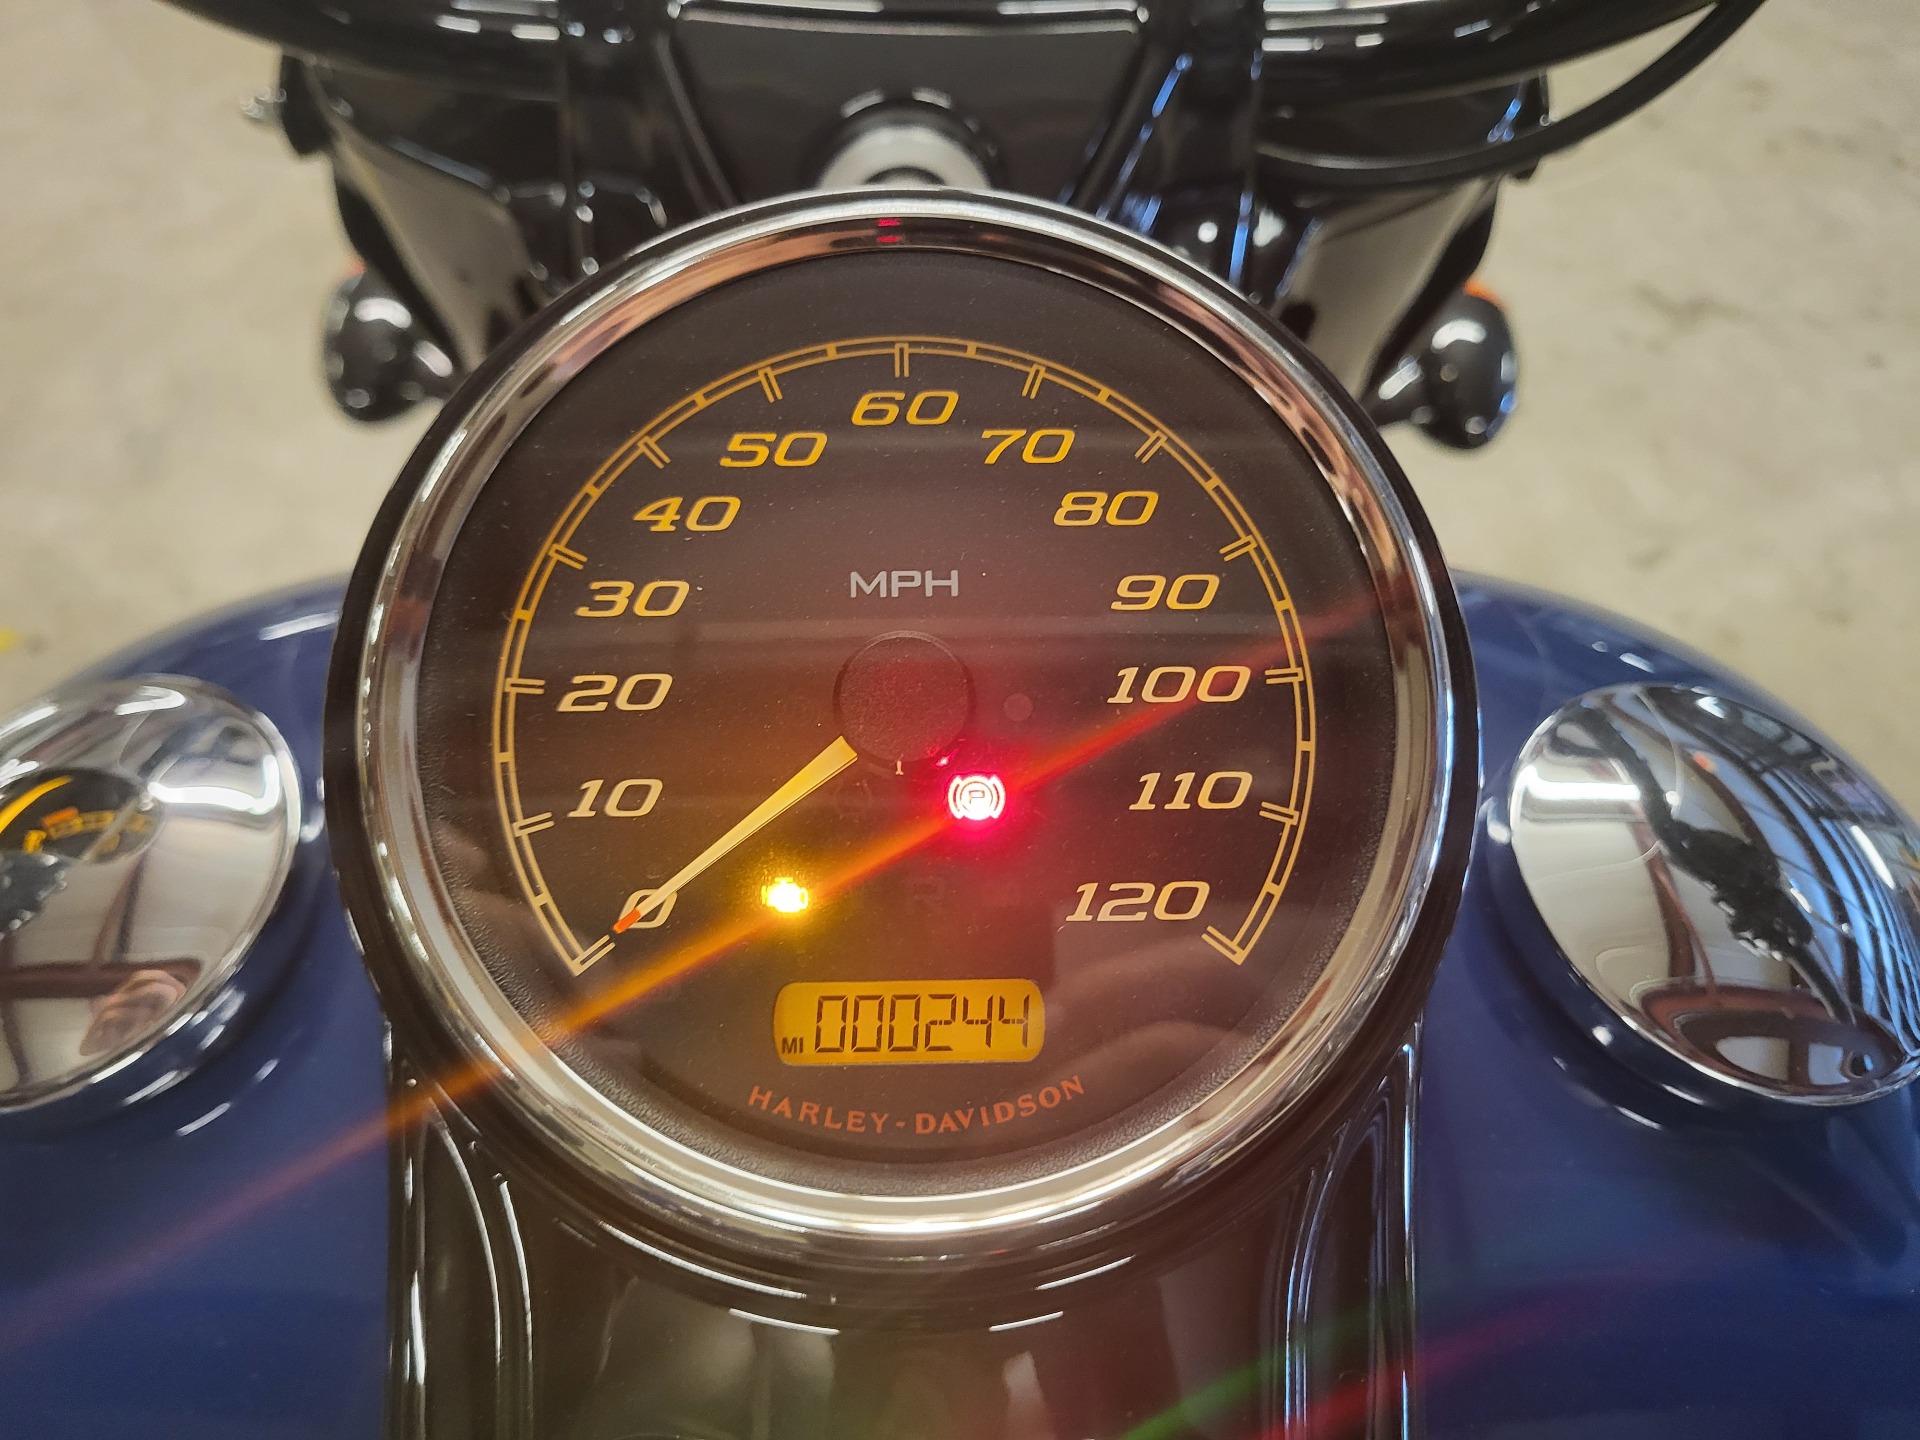 2023 Harley-Davidson Freewheeler® in Mentor, Ohio - Photo 2